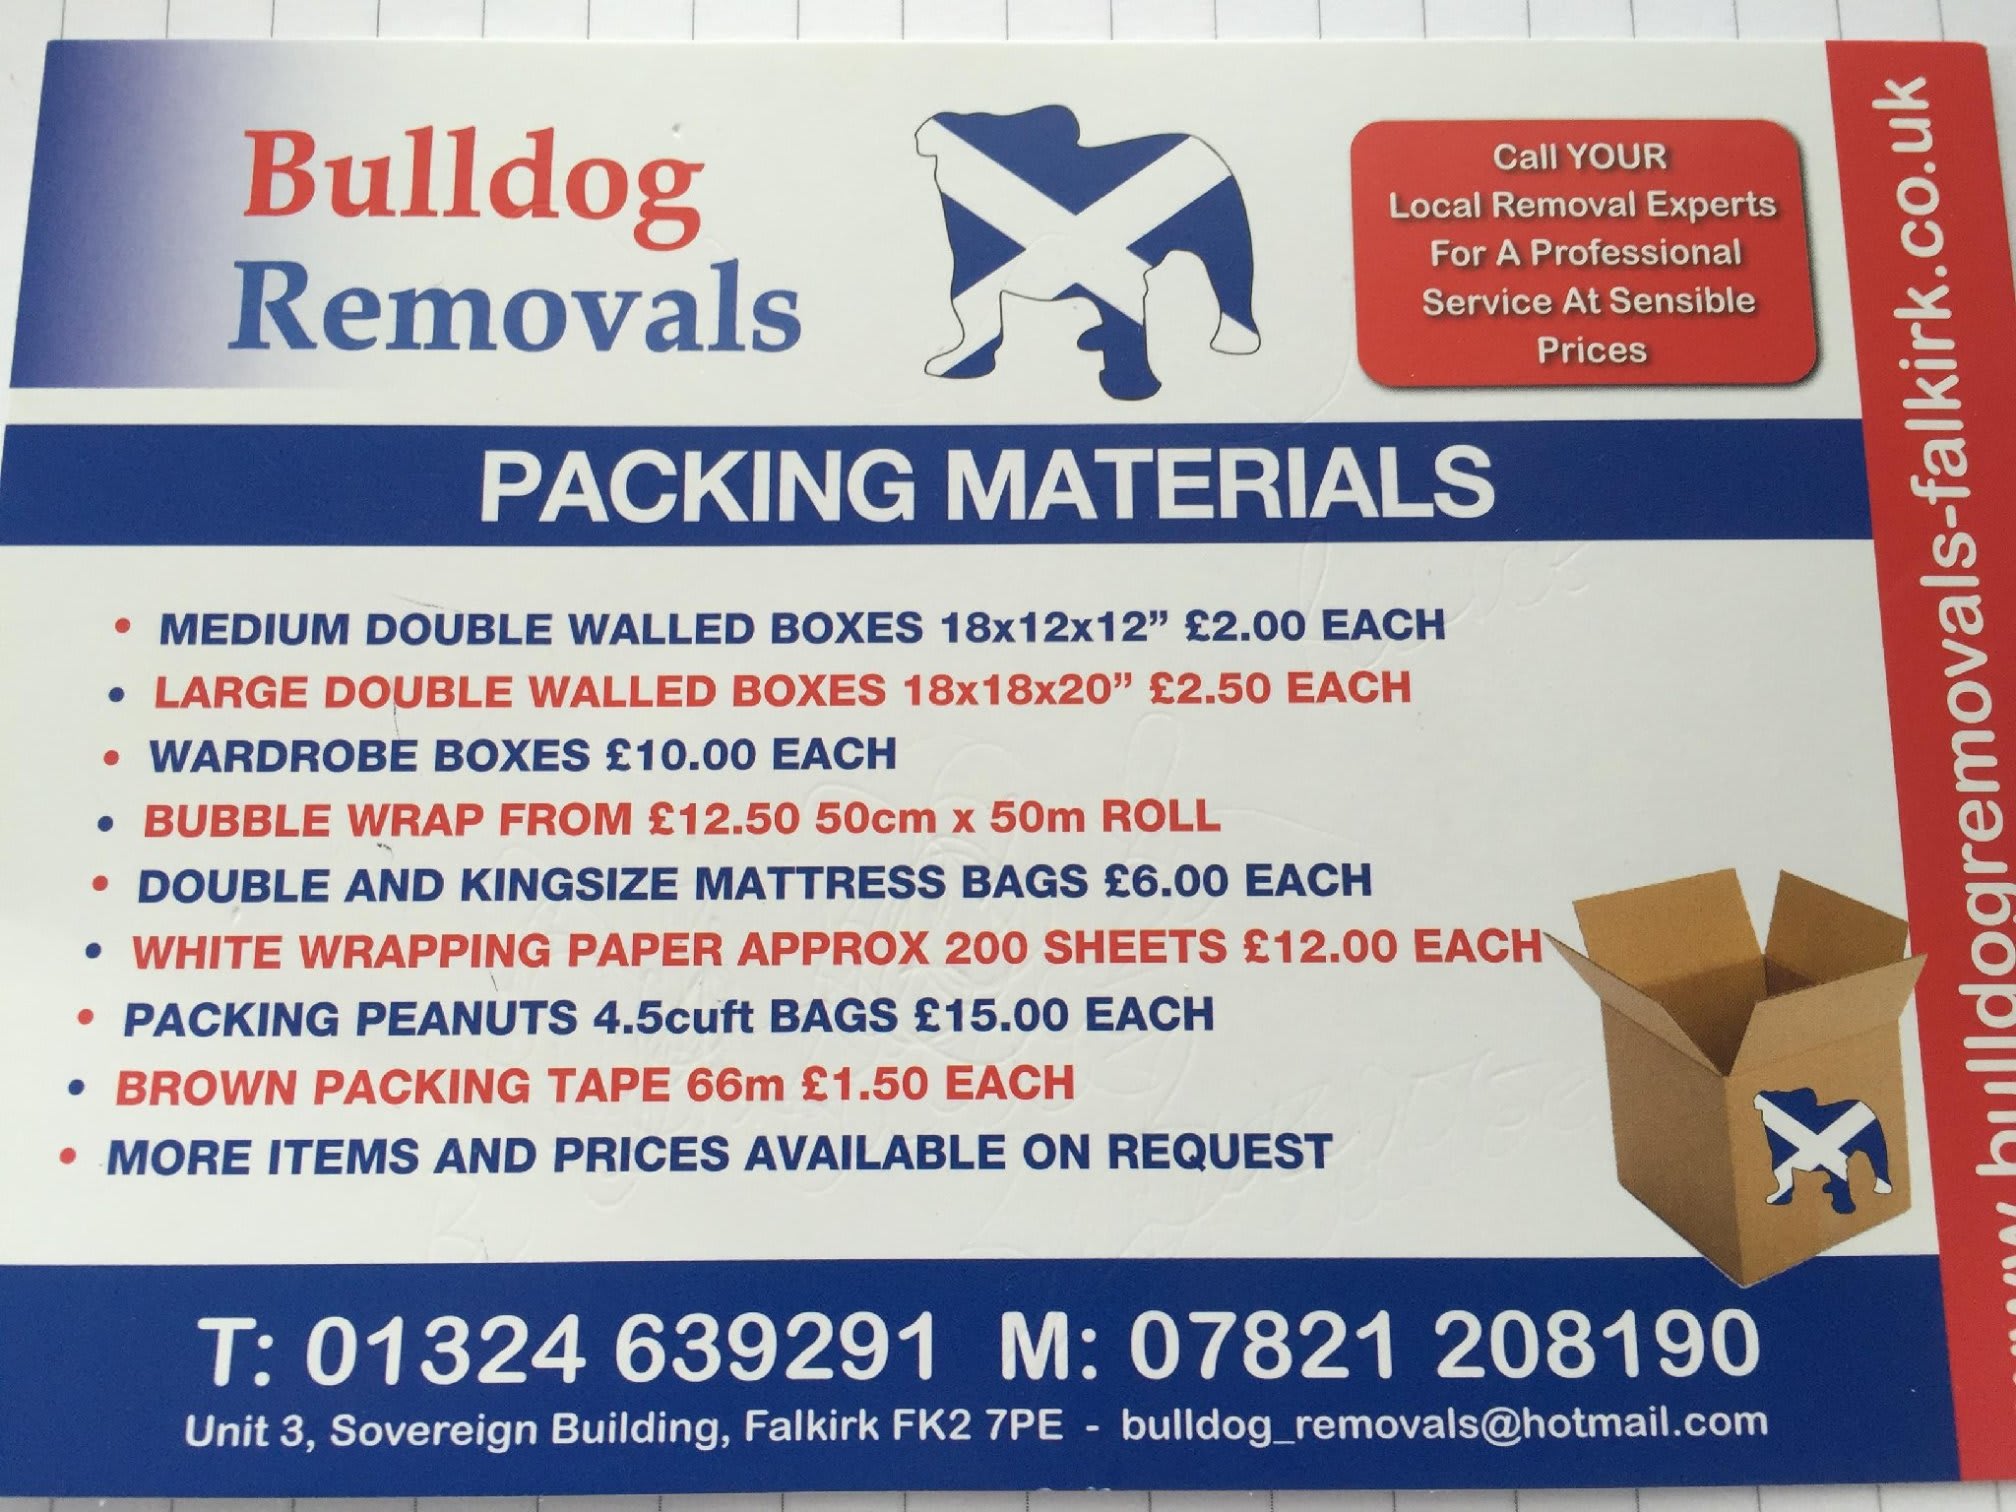 Images Bulldog Removals Ltd